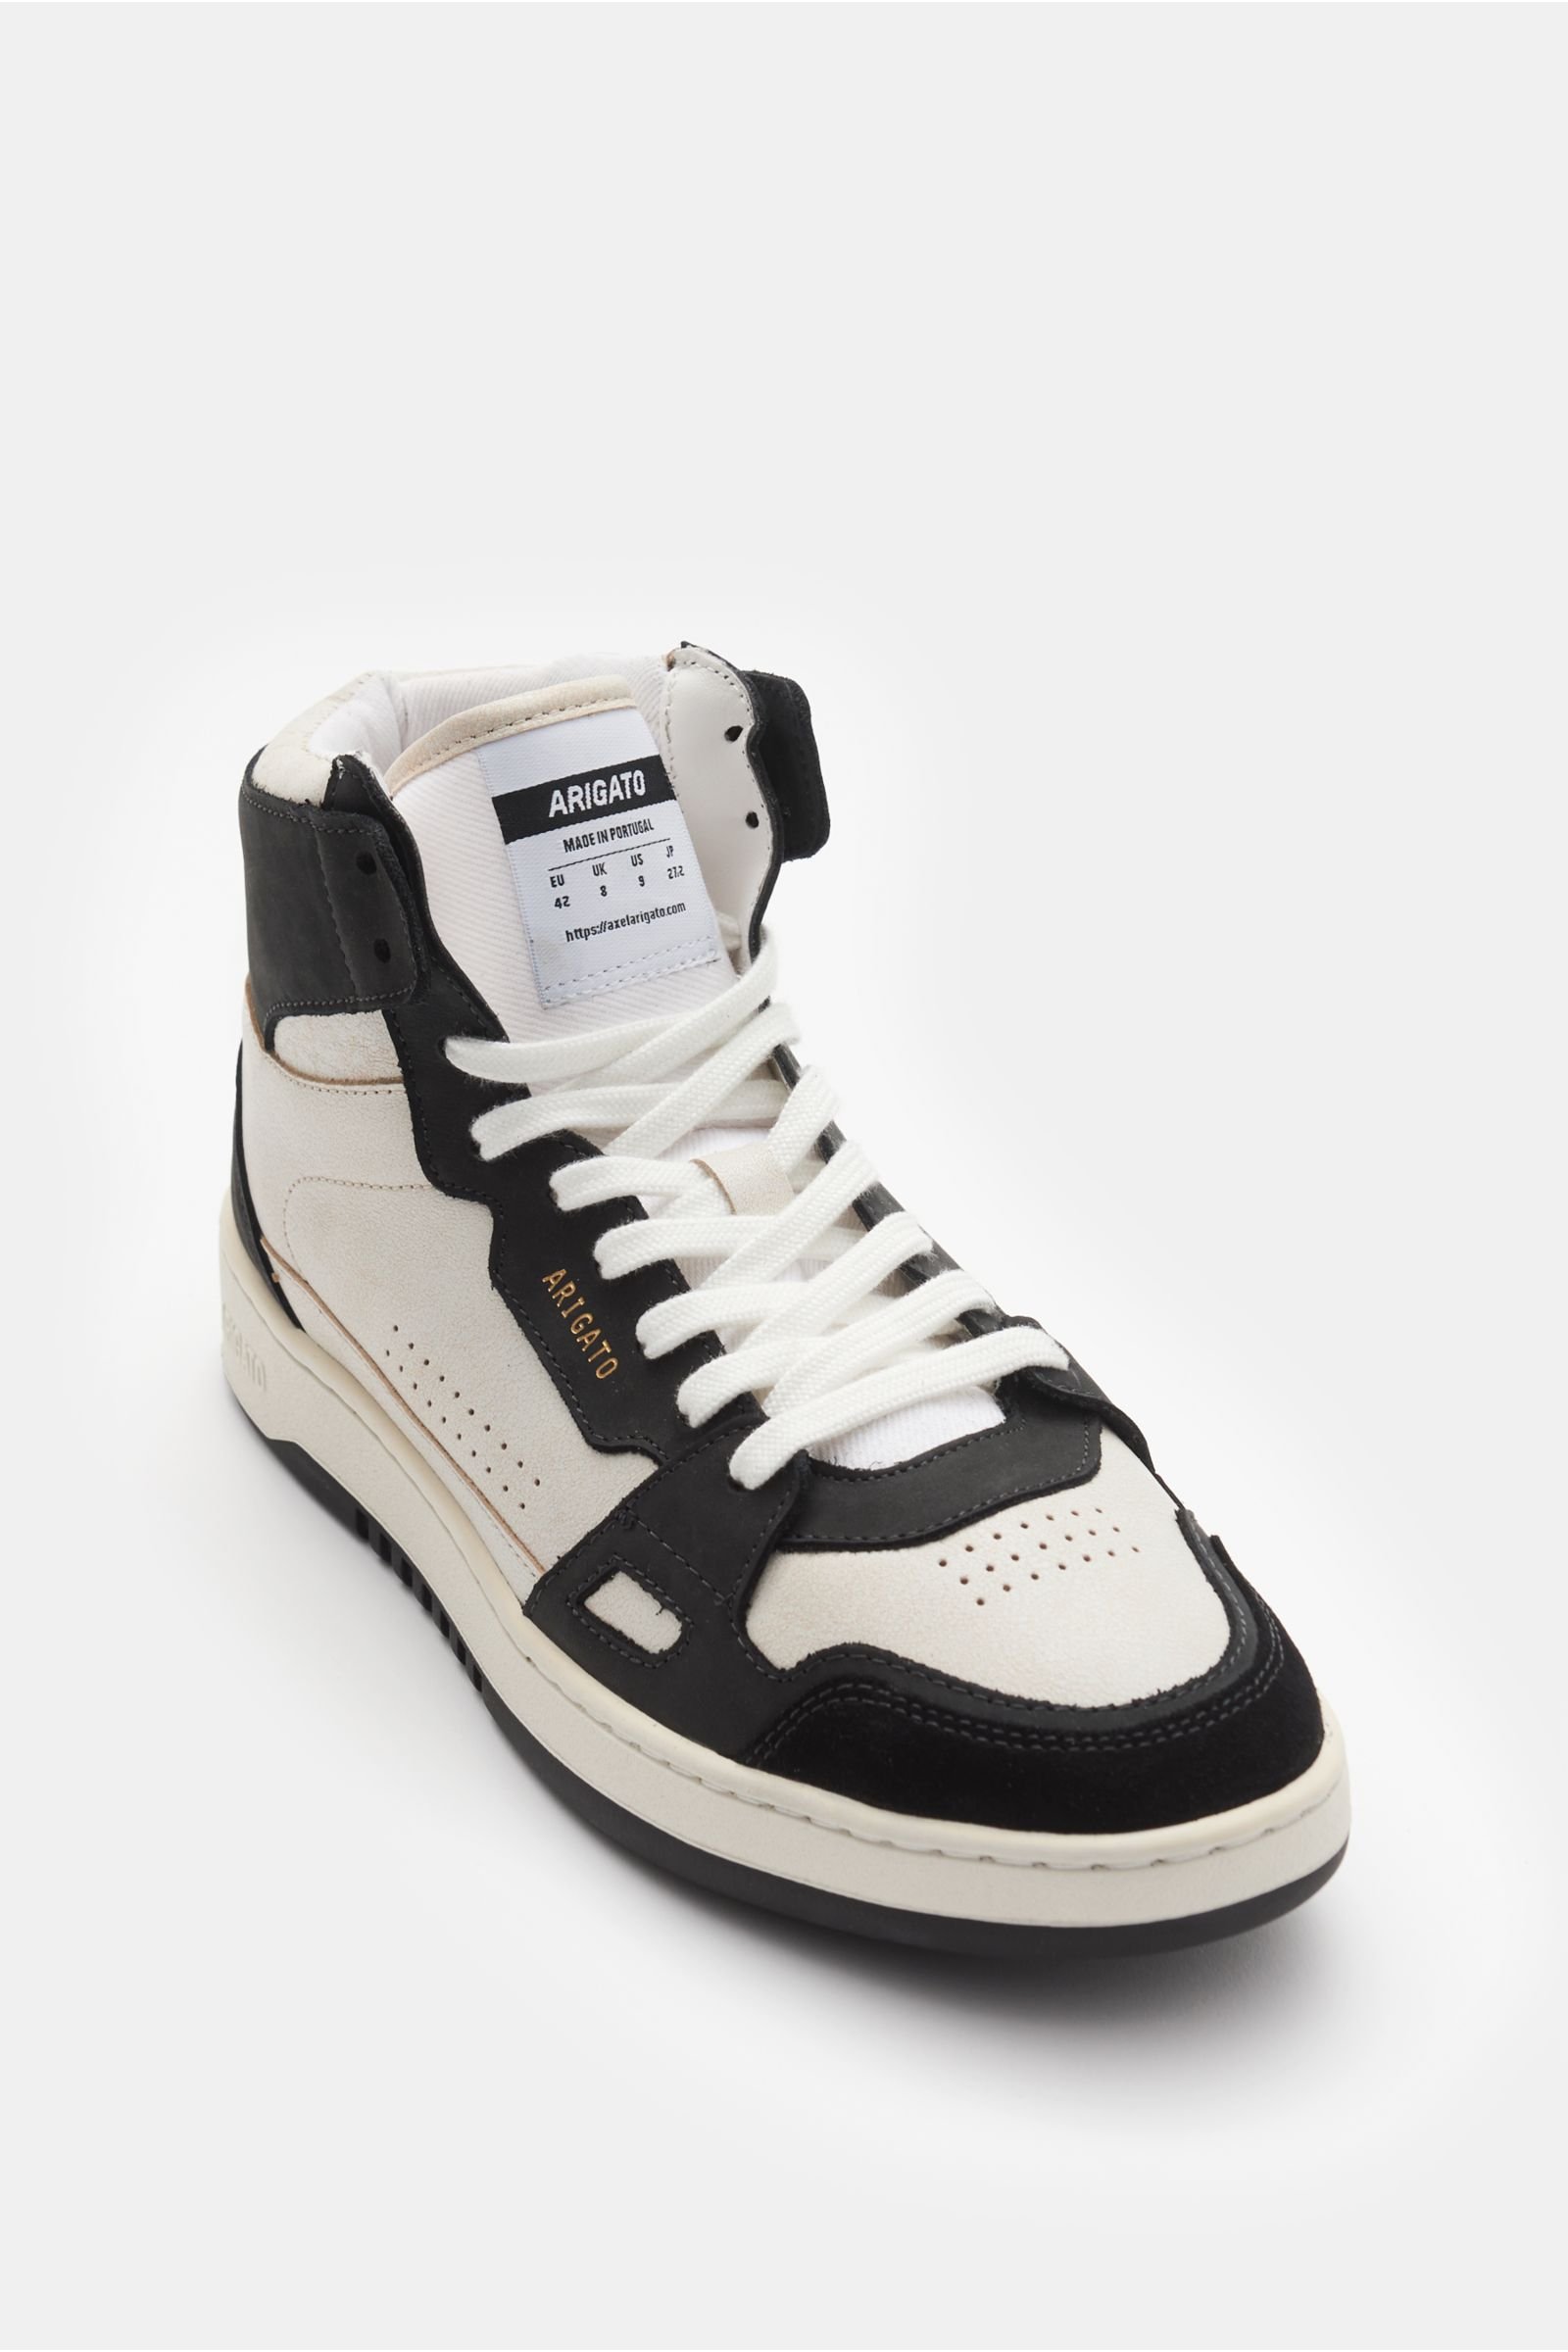 AXEL ARIGATO high top sneakers 'Dice Hi' black/beige | BRAUN Hamburg